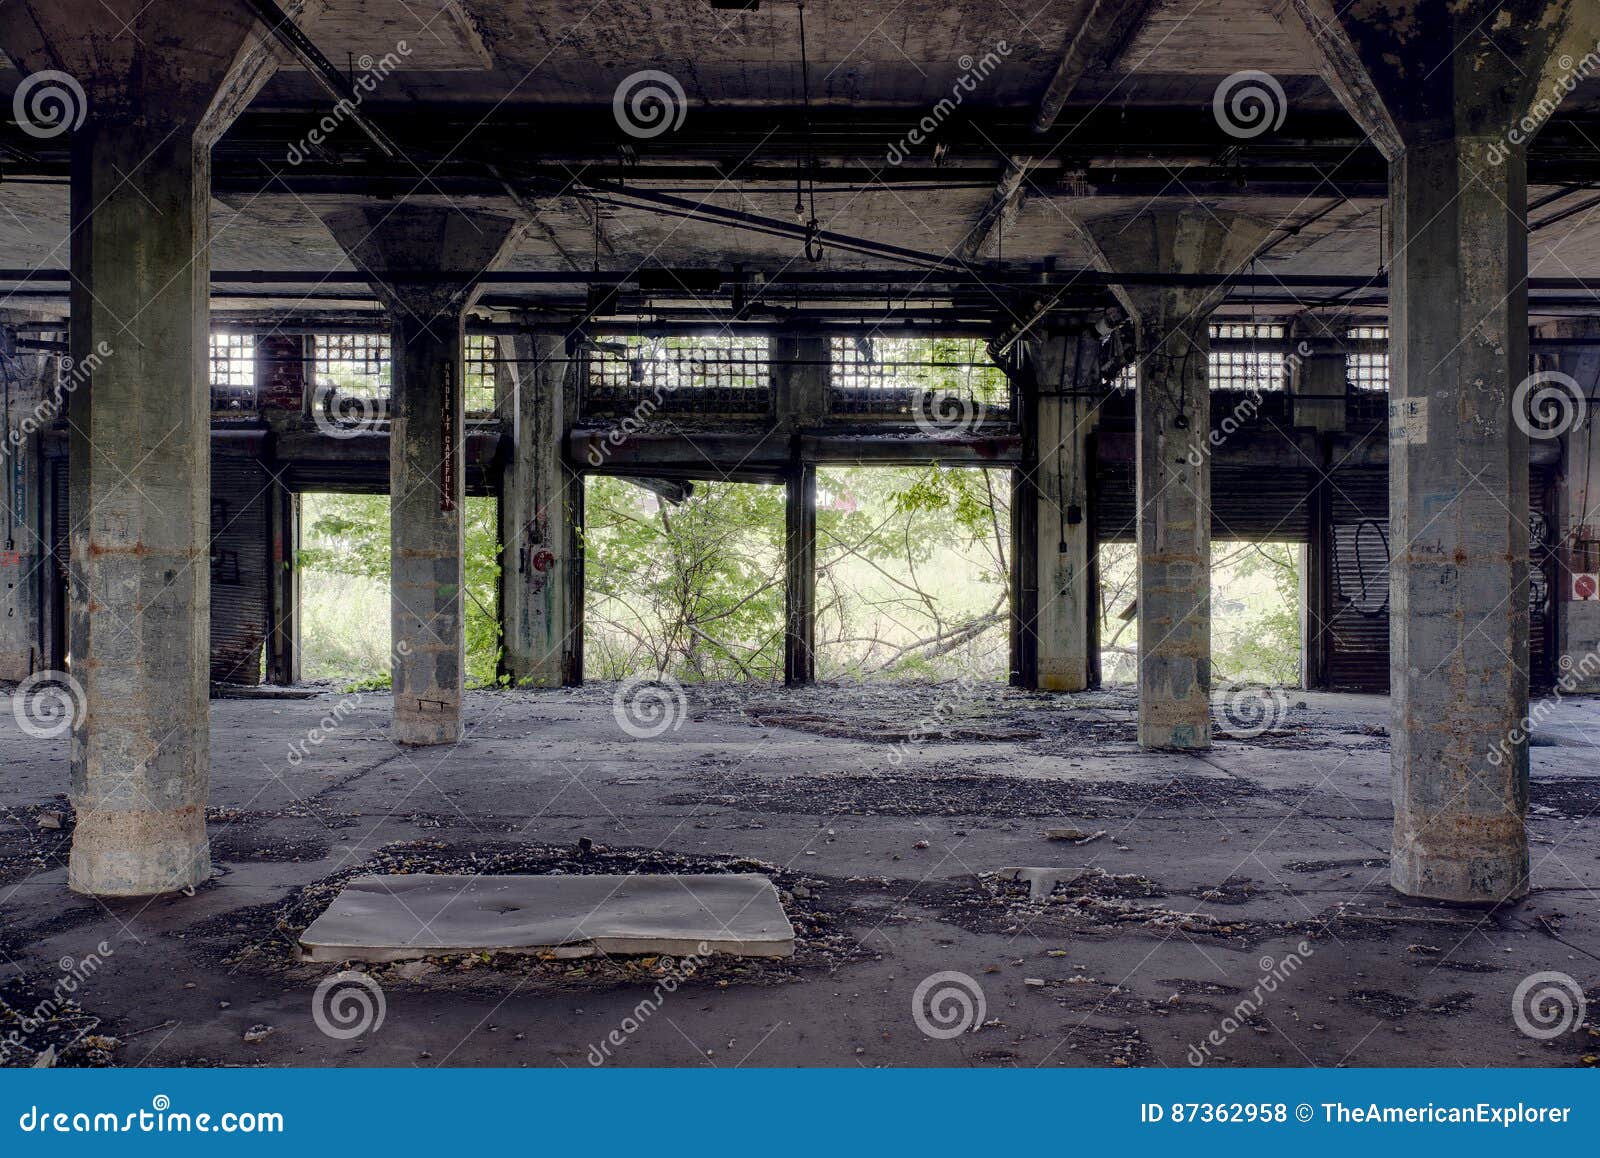 Abandoned Train Station - New Stock Photo - Image of railroad, city: 87362958